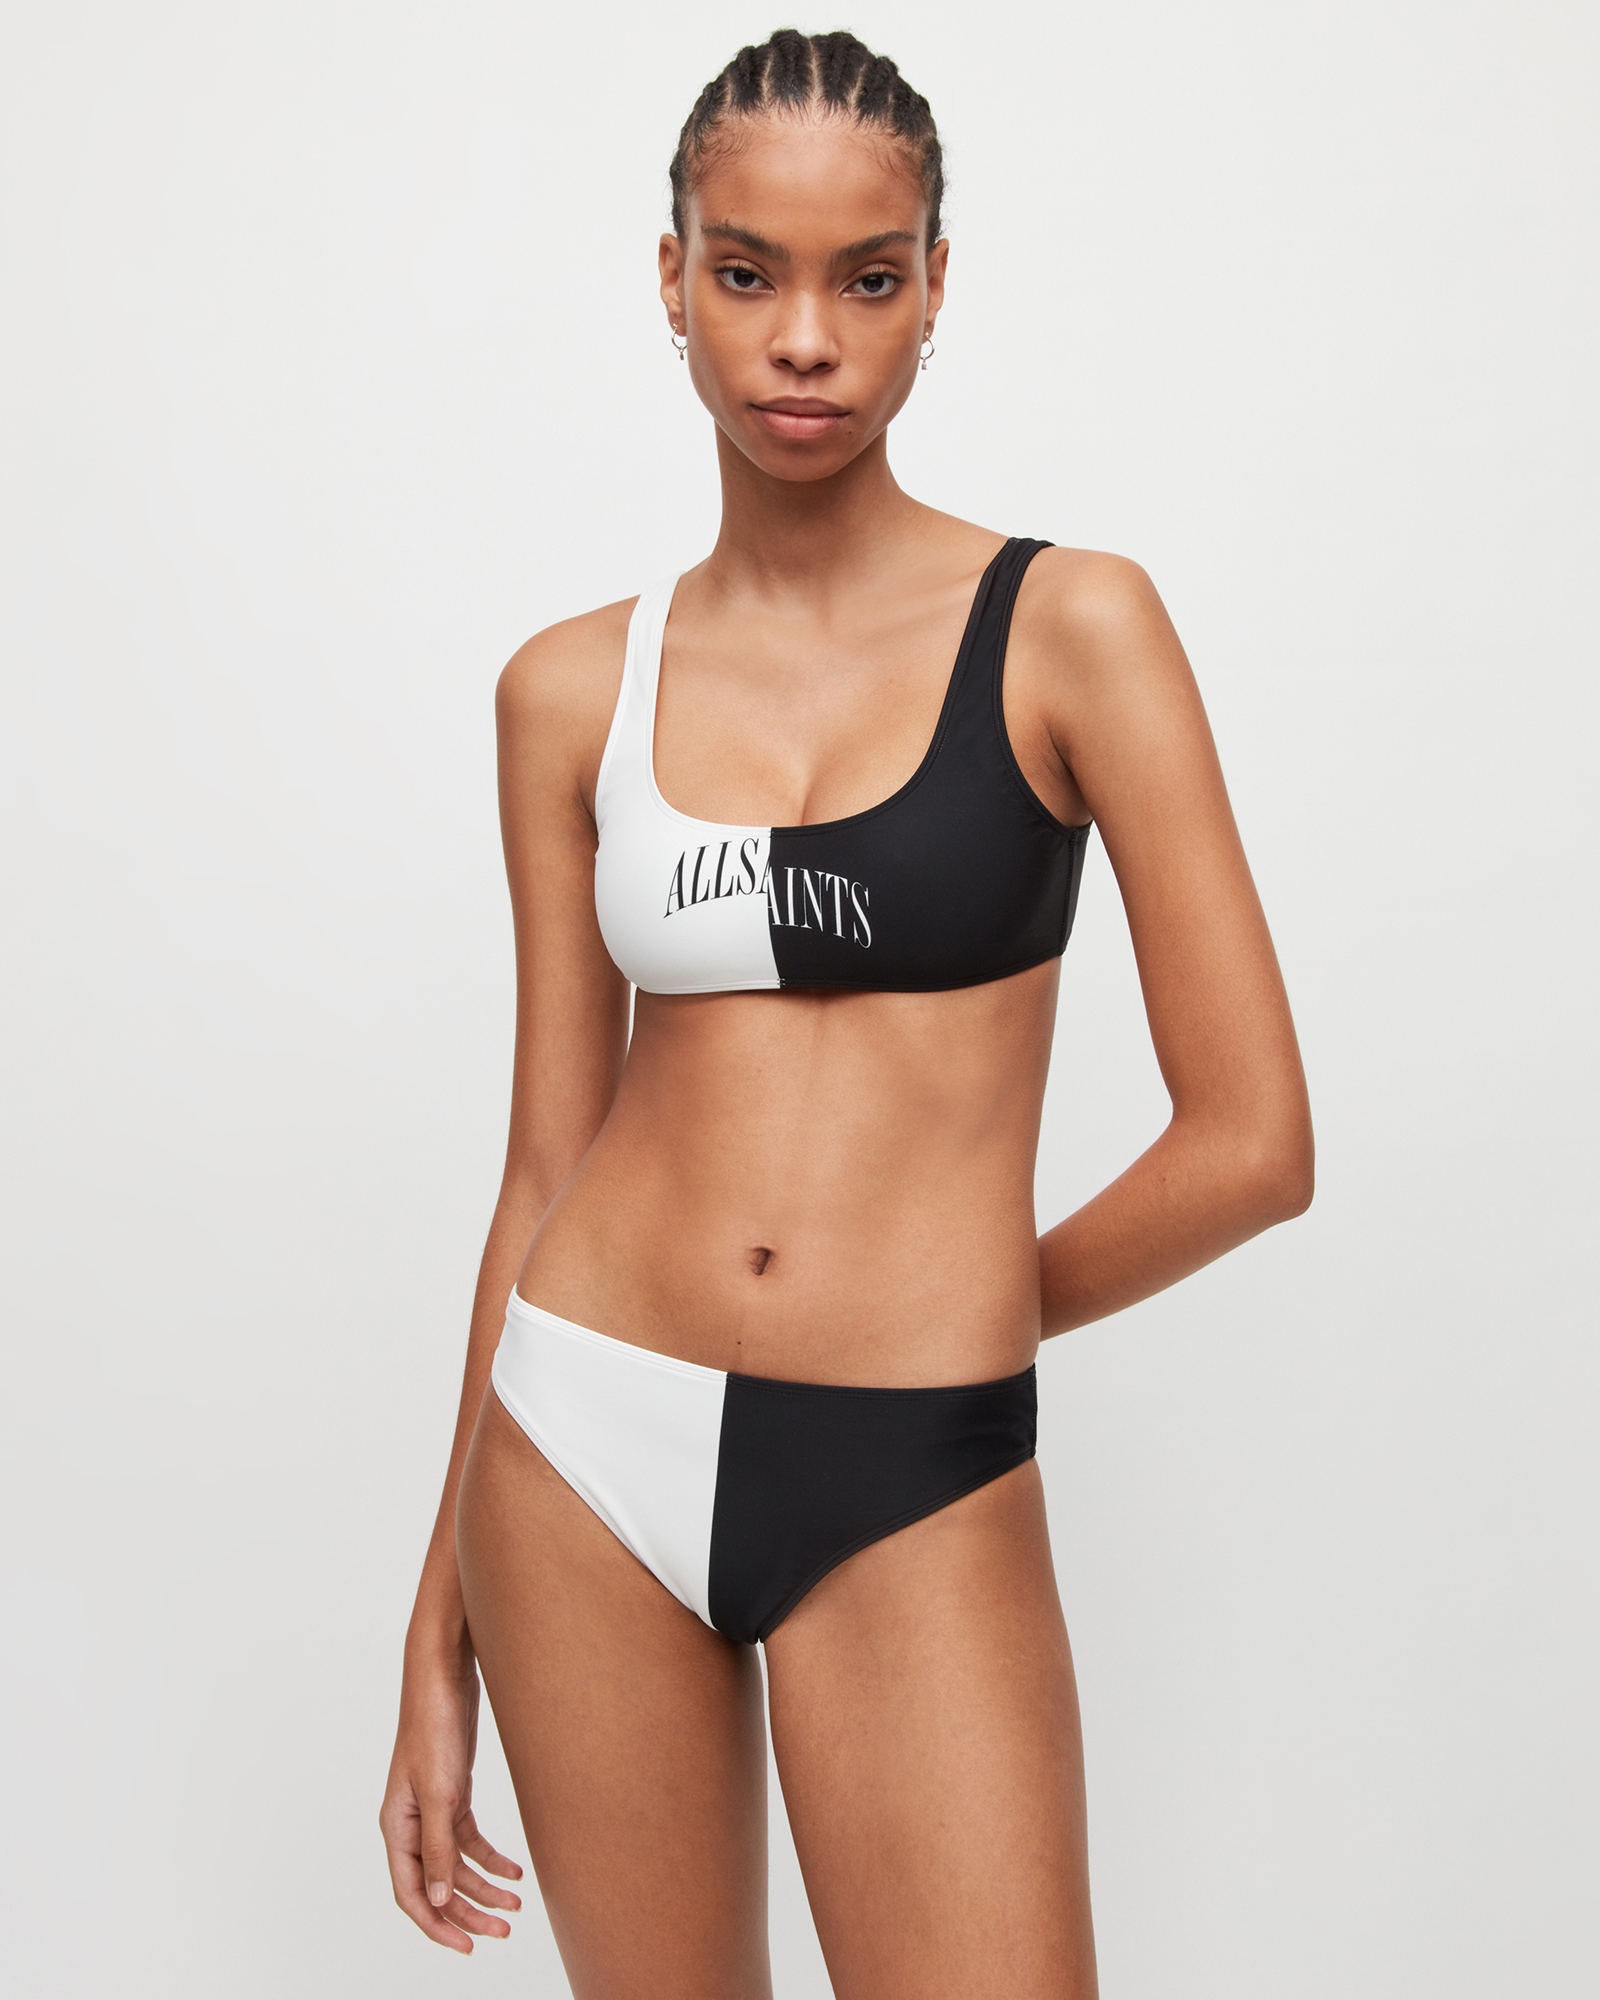 AllSaints Women's Colour Block Regular Fit Mia Split Saints Bikini Top, Black and White, Size: M